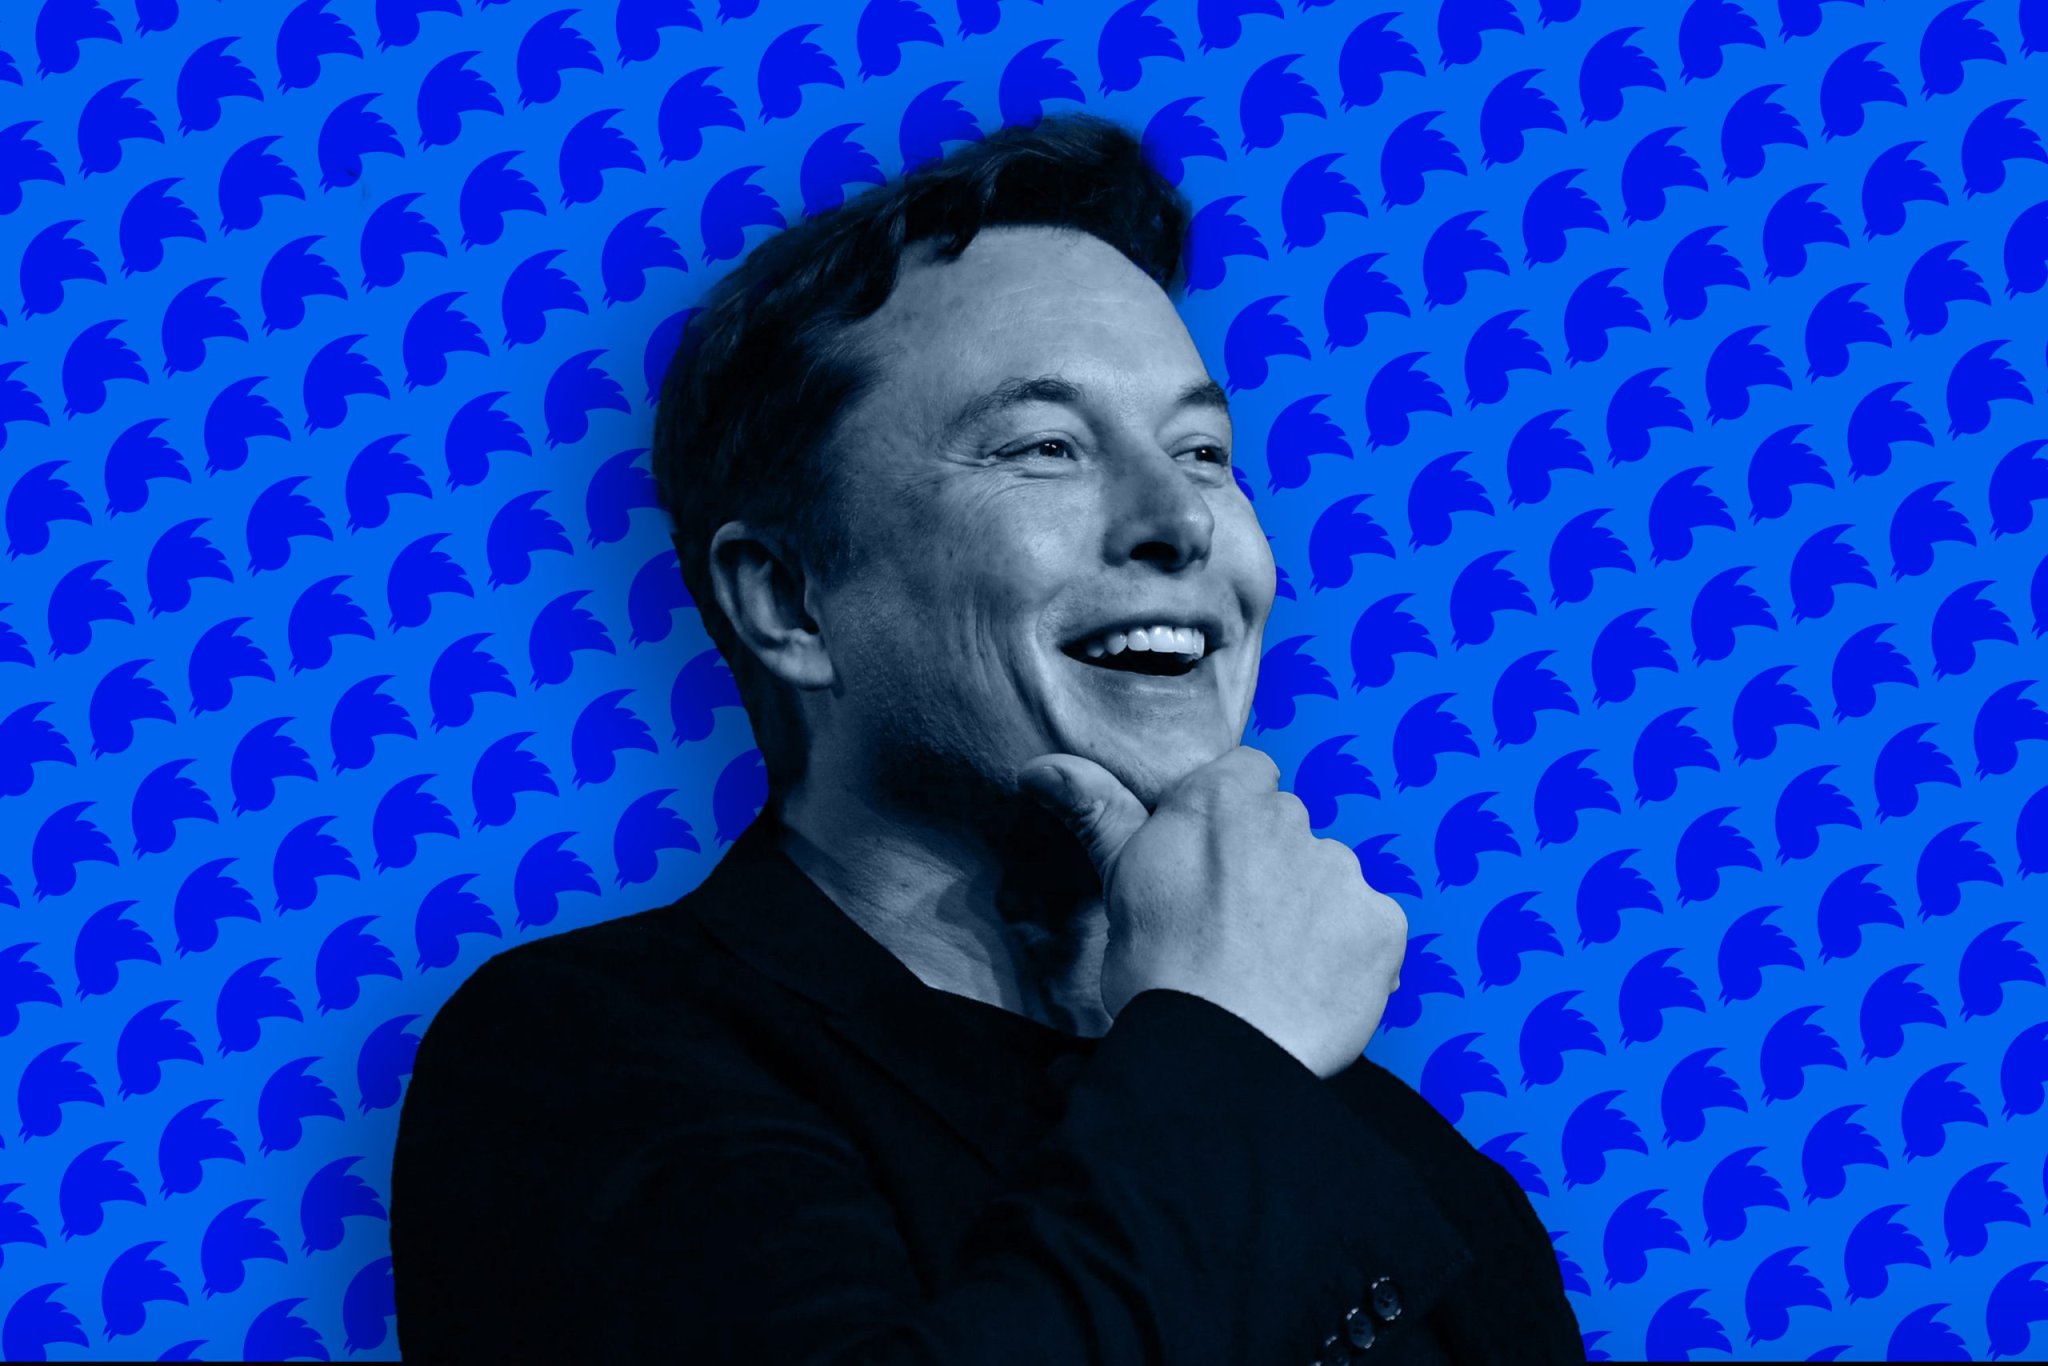 Elon Musk ya es el dueño de Twitter